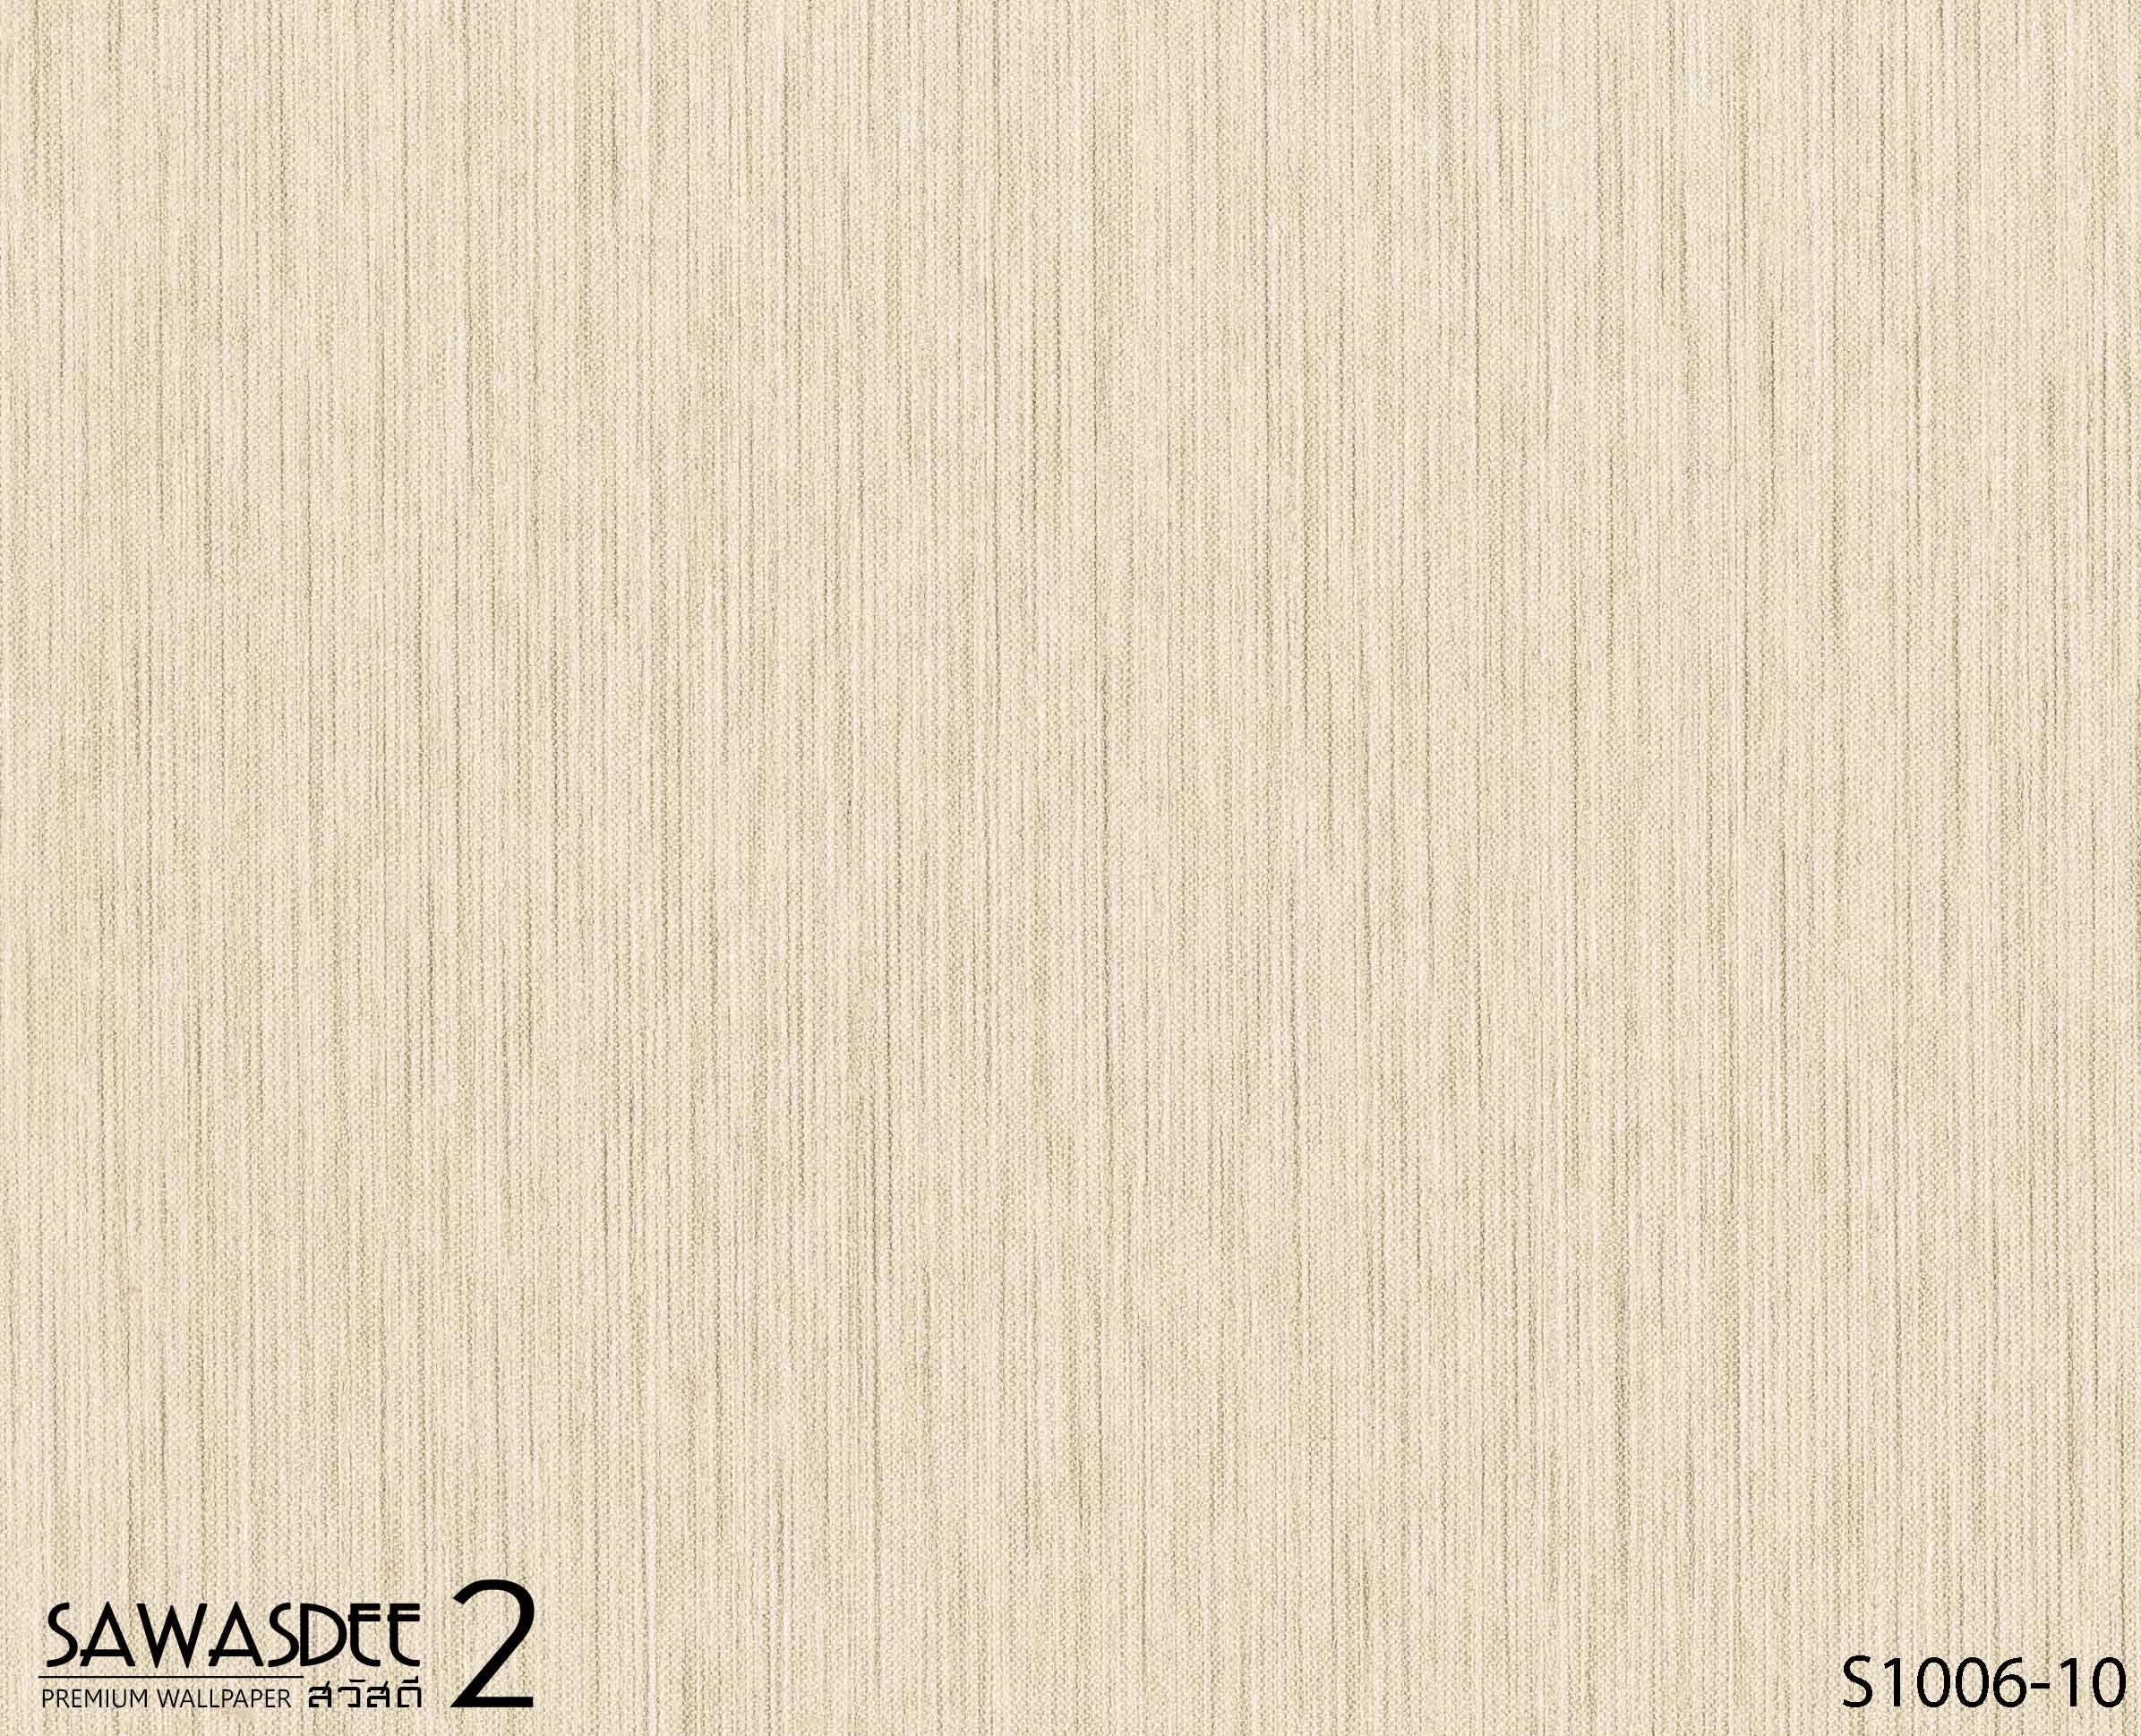 Wallpaper (SAWASDEE 2) S1006-10